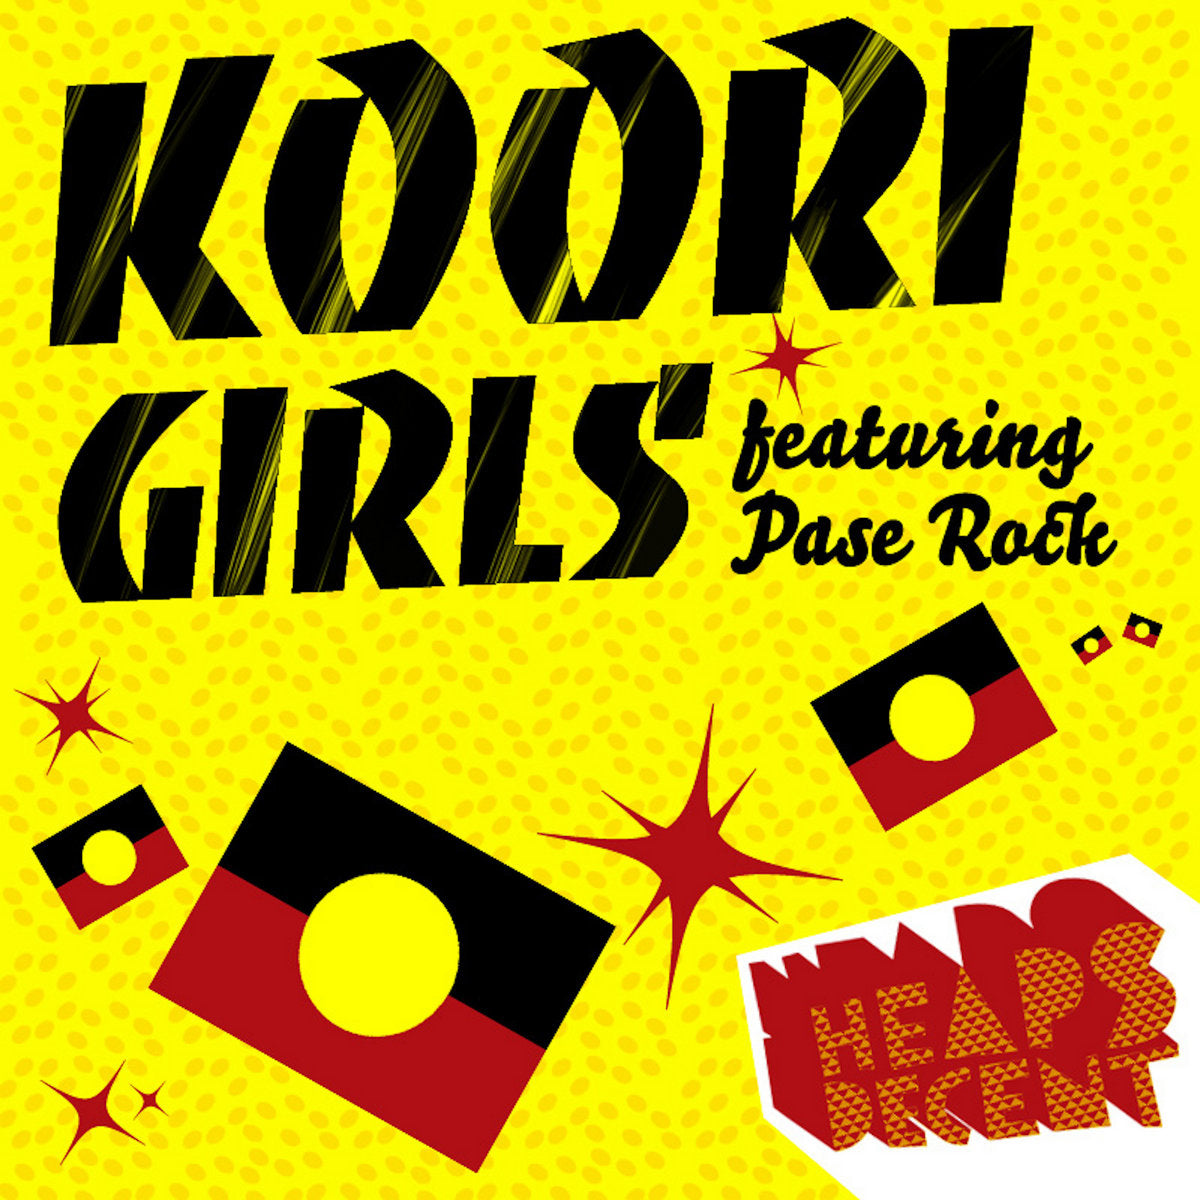 Koori Girls